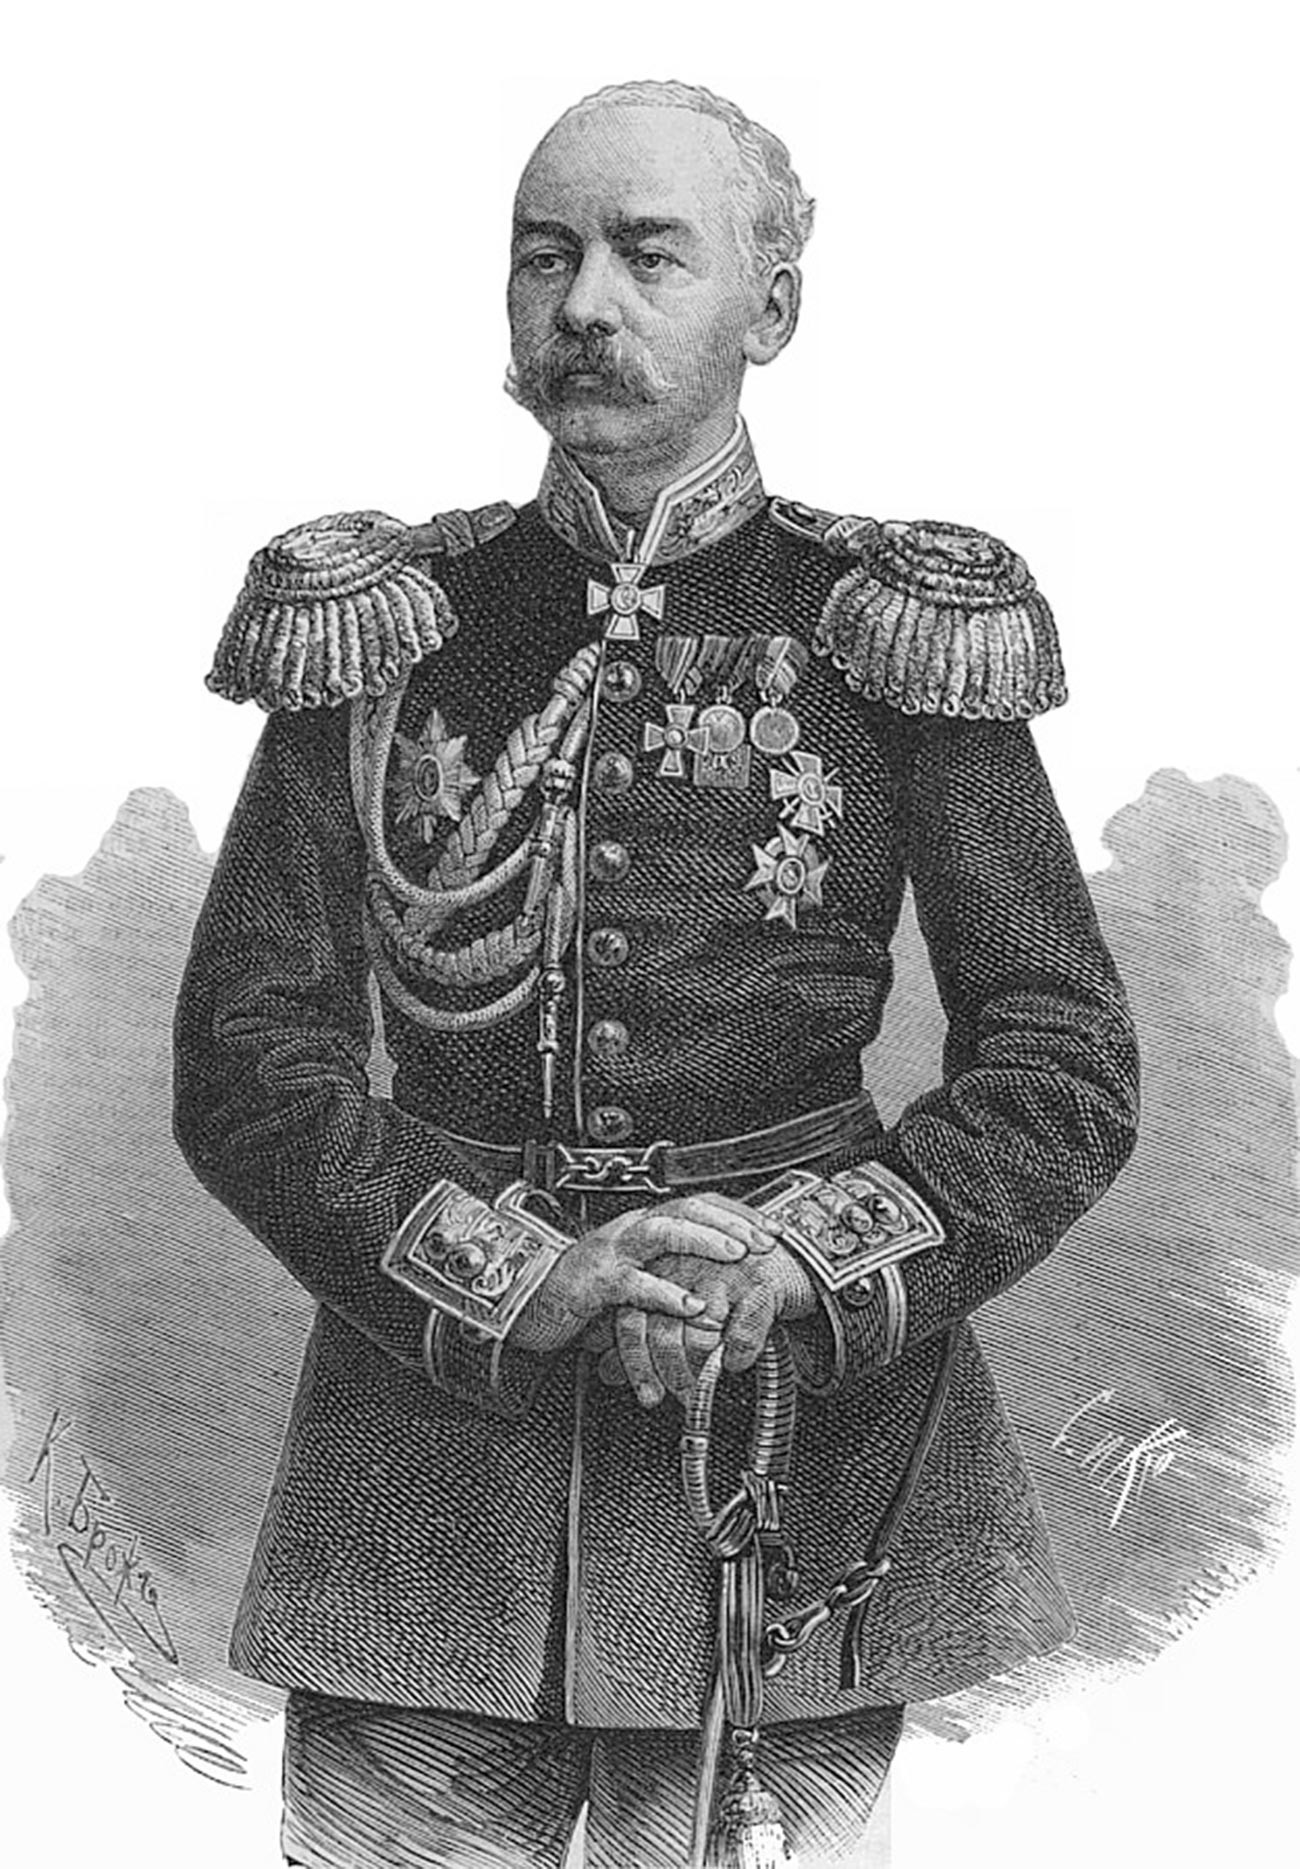 Konstantin Petrovich von Kaufman, generale russo, primo governatore del Turkestan